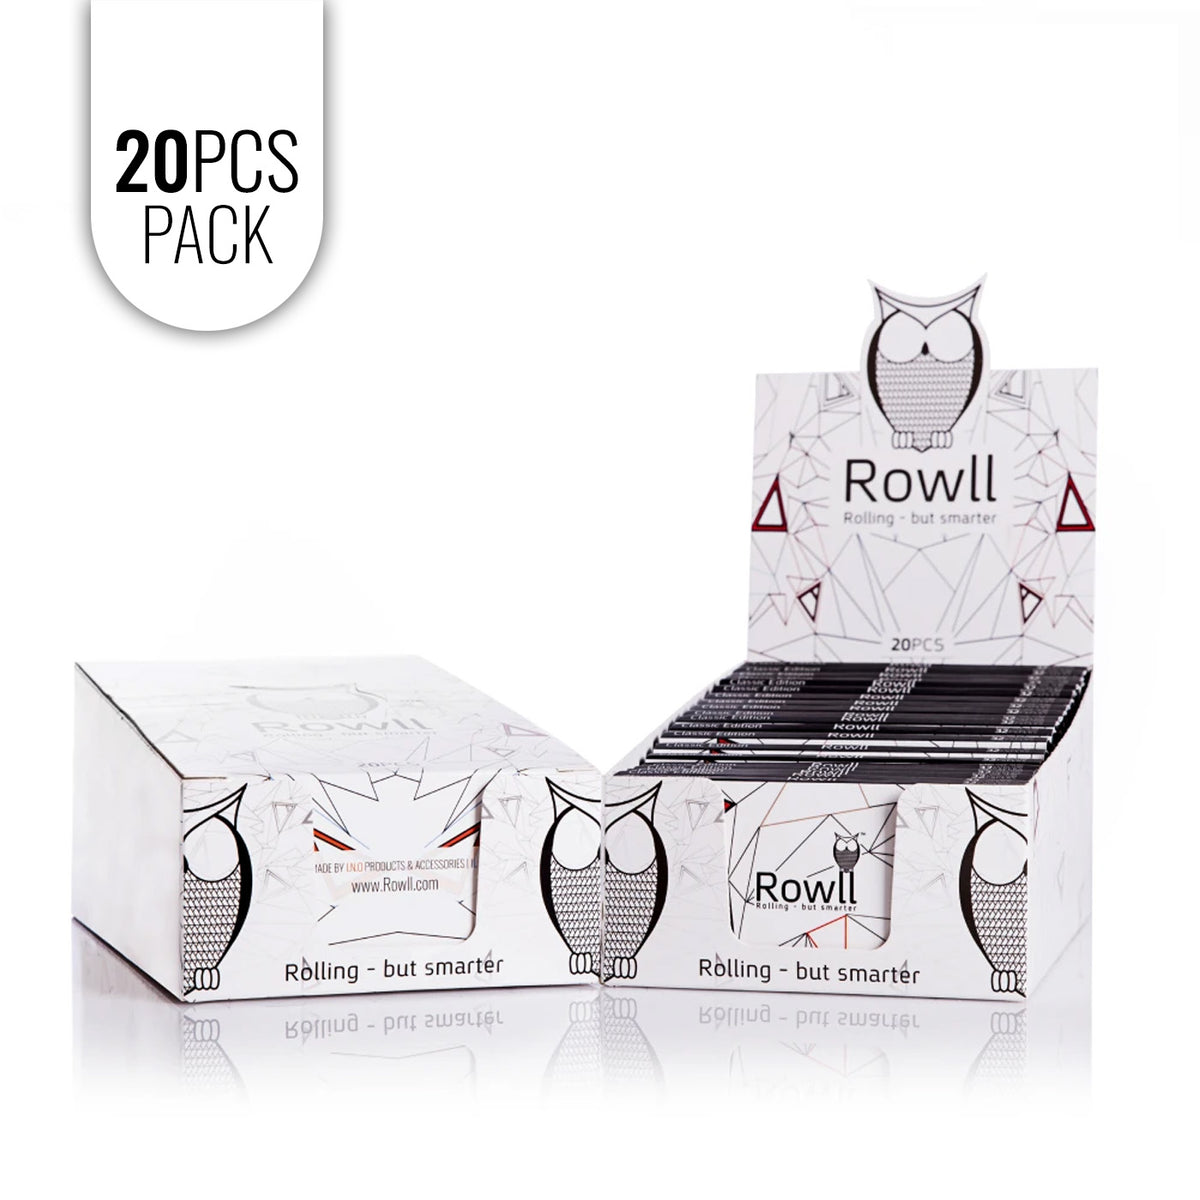 ROWLL all in 1 Rolling Kit 60 pcs Mega Pack – Rowll - Rolling but